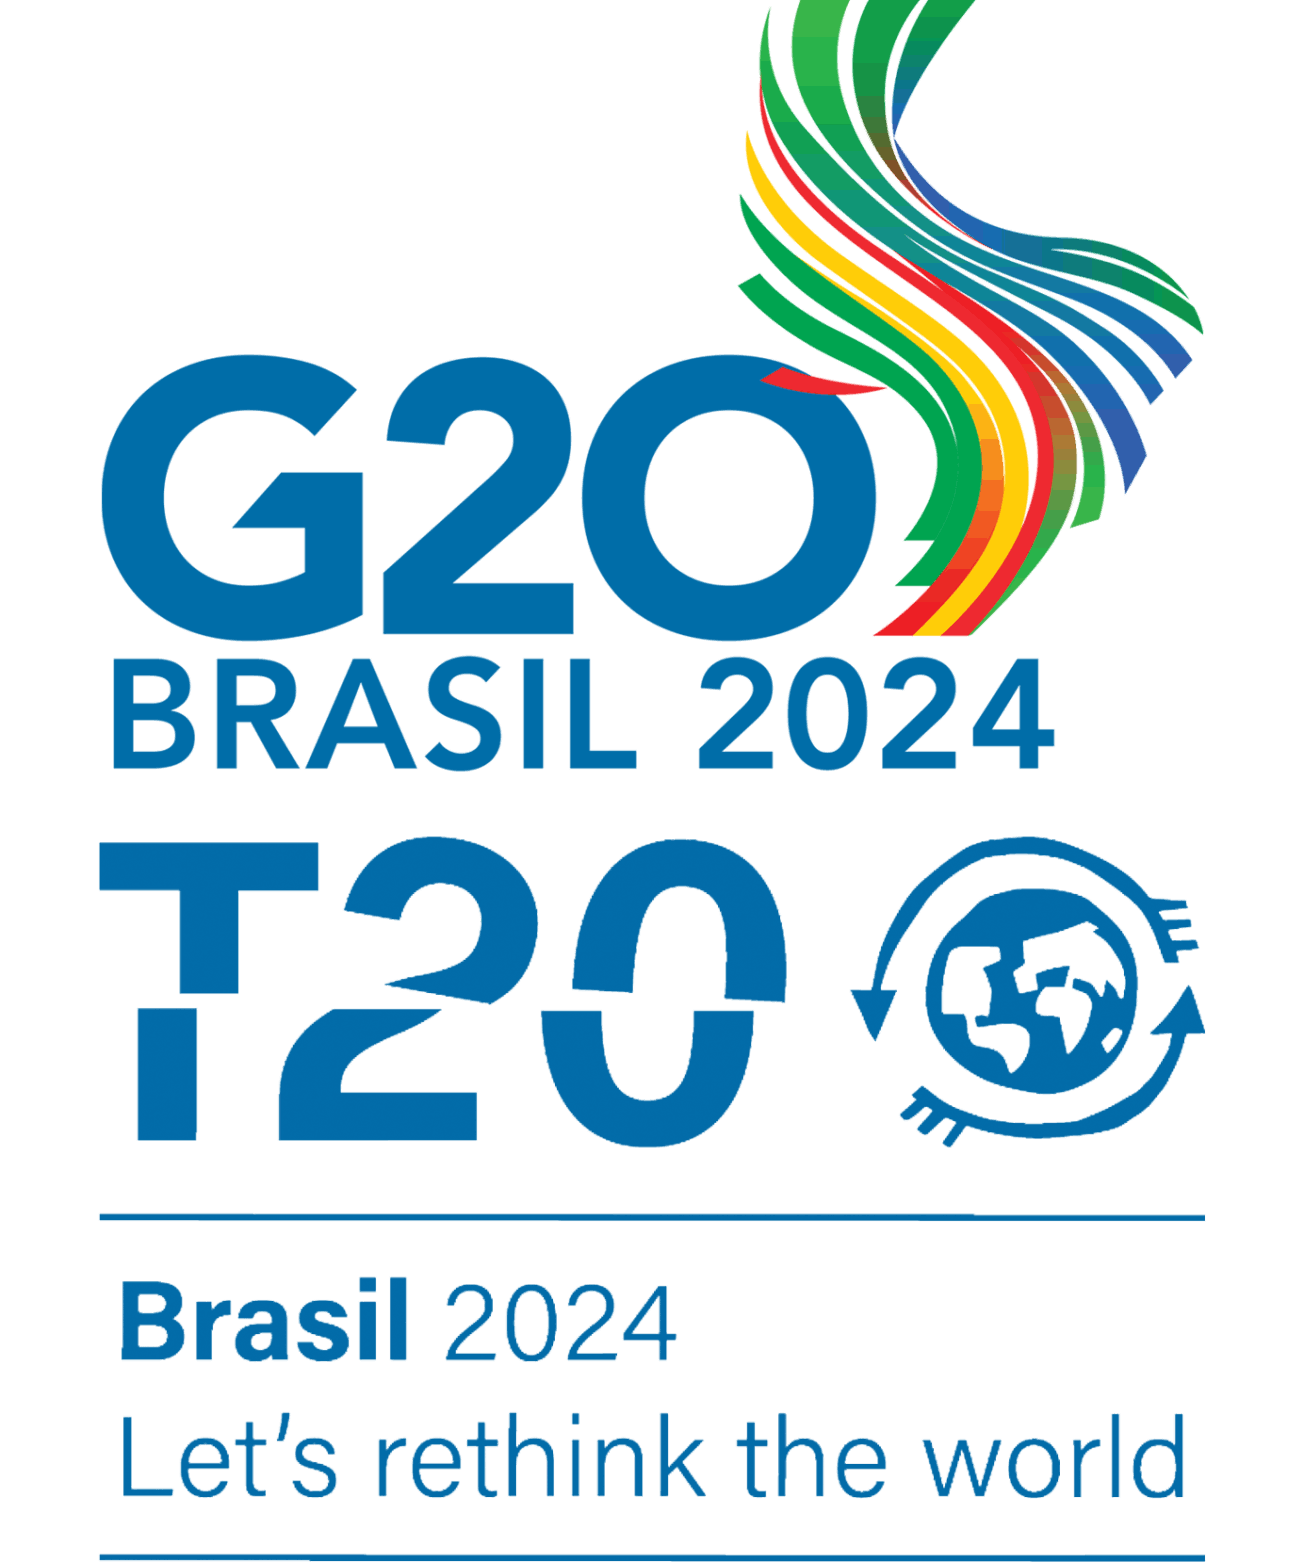 Brazil-China Innovation Dialogue 2024: Technology and Development 